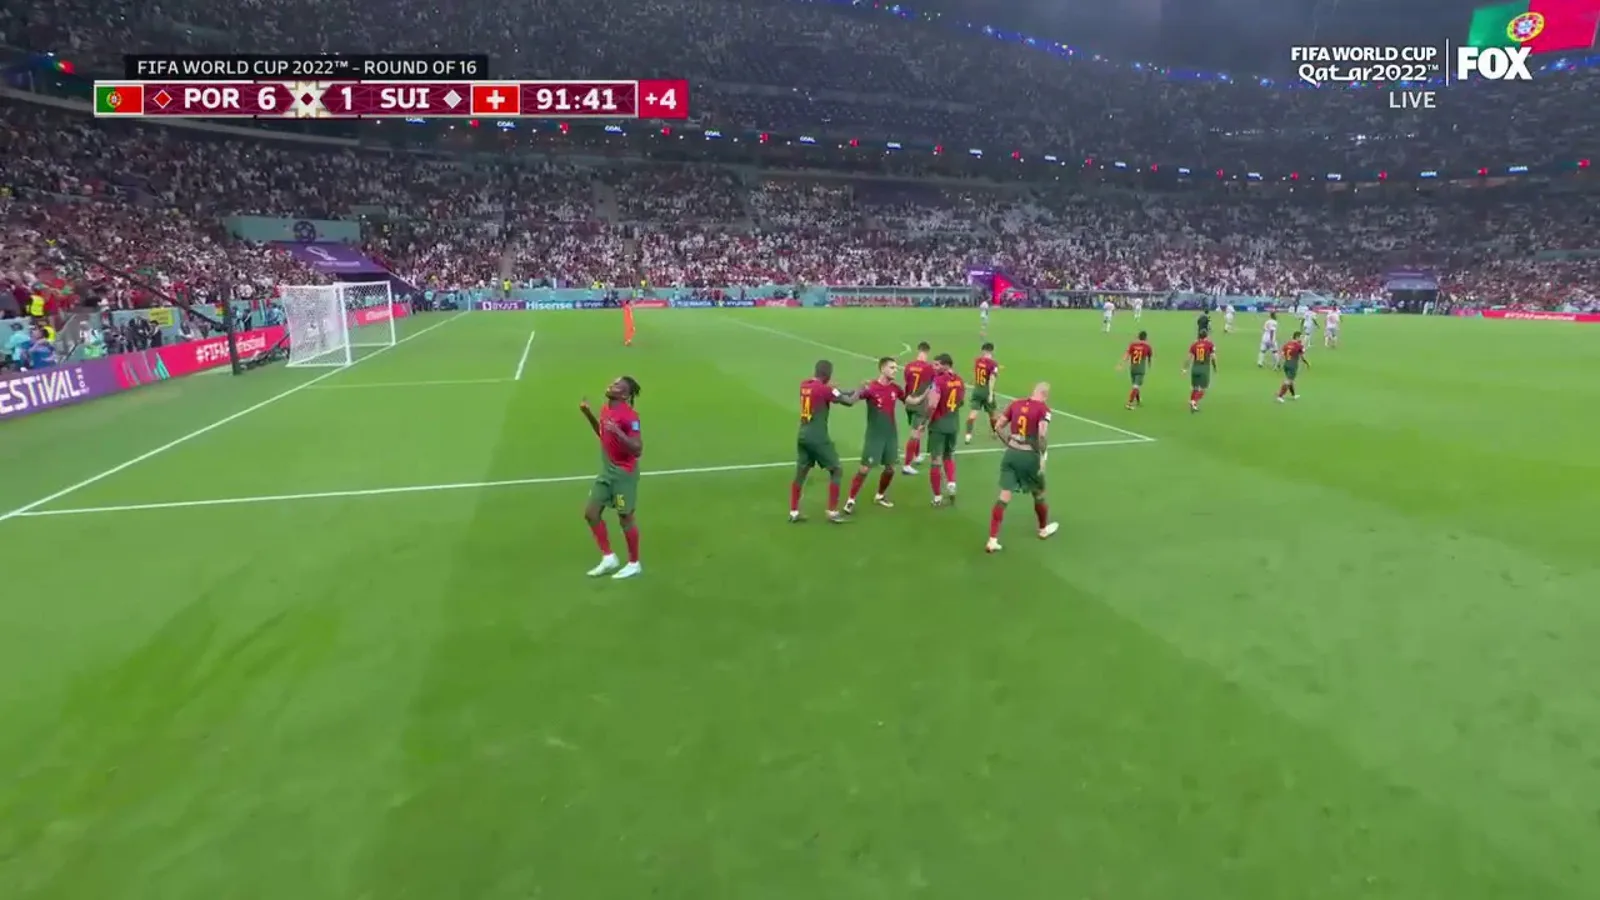 Portugal's Rafael Leao scores against Switzerland in 90+2'